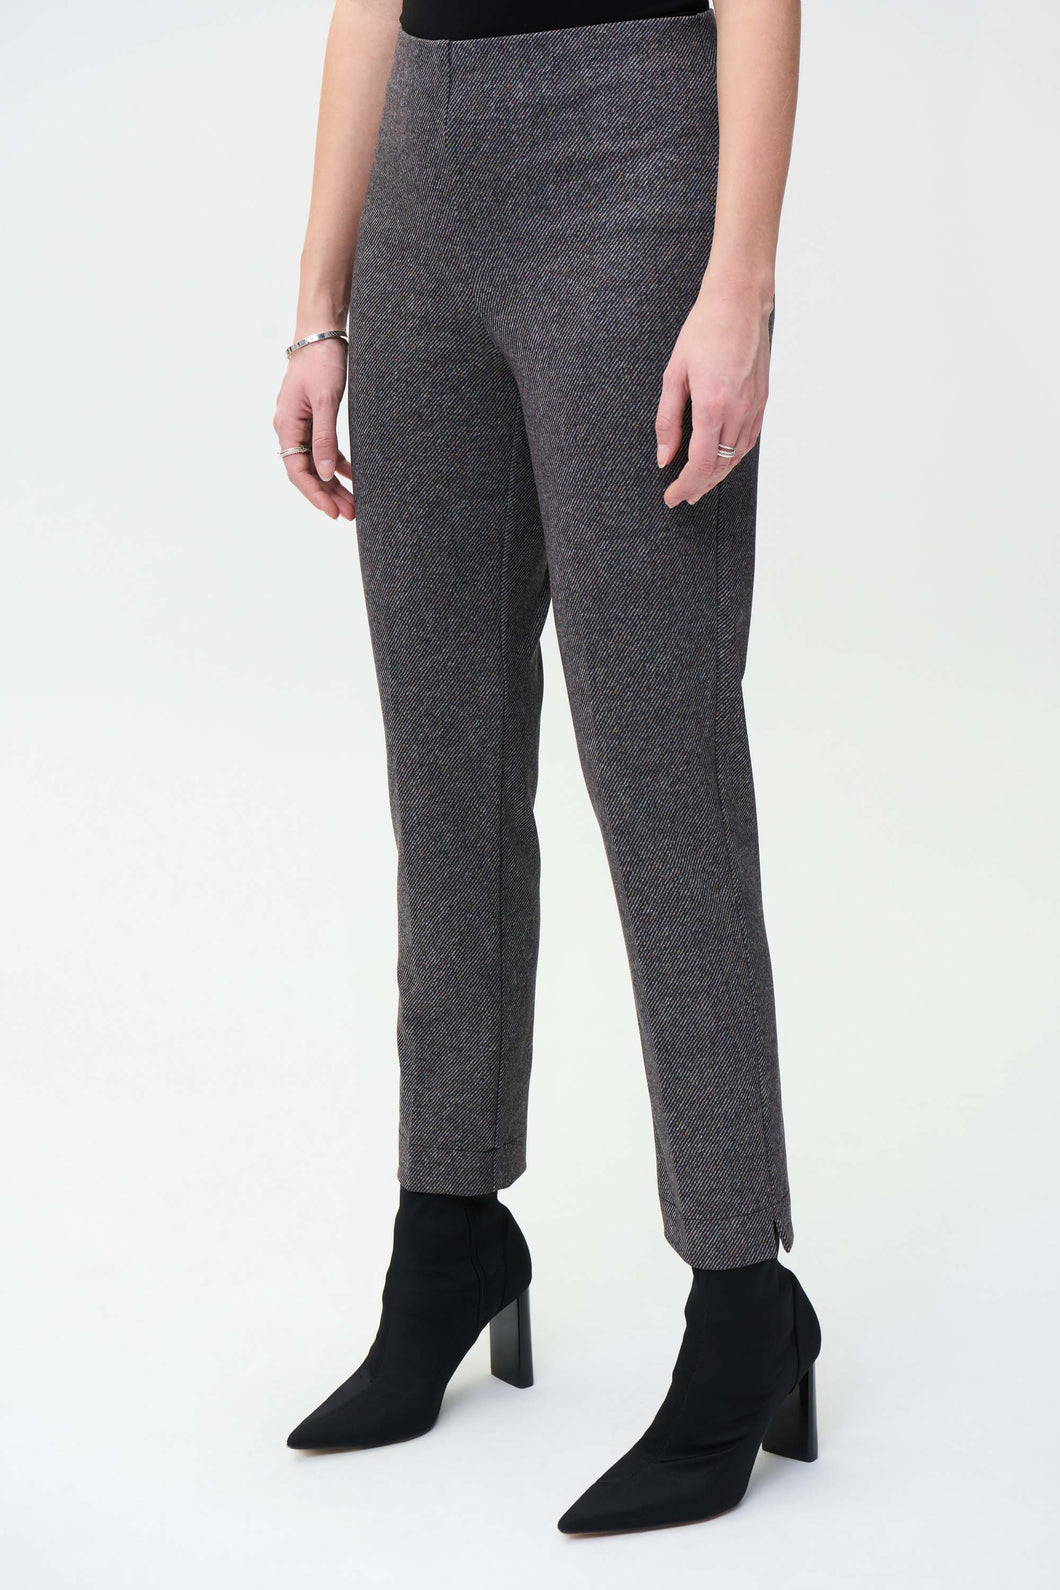 Joseph Ribkoff Black & Multi-Colour Pull On Slim Pants